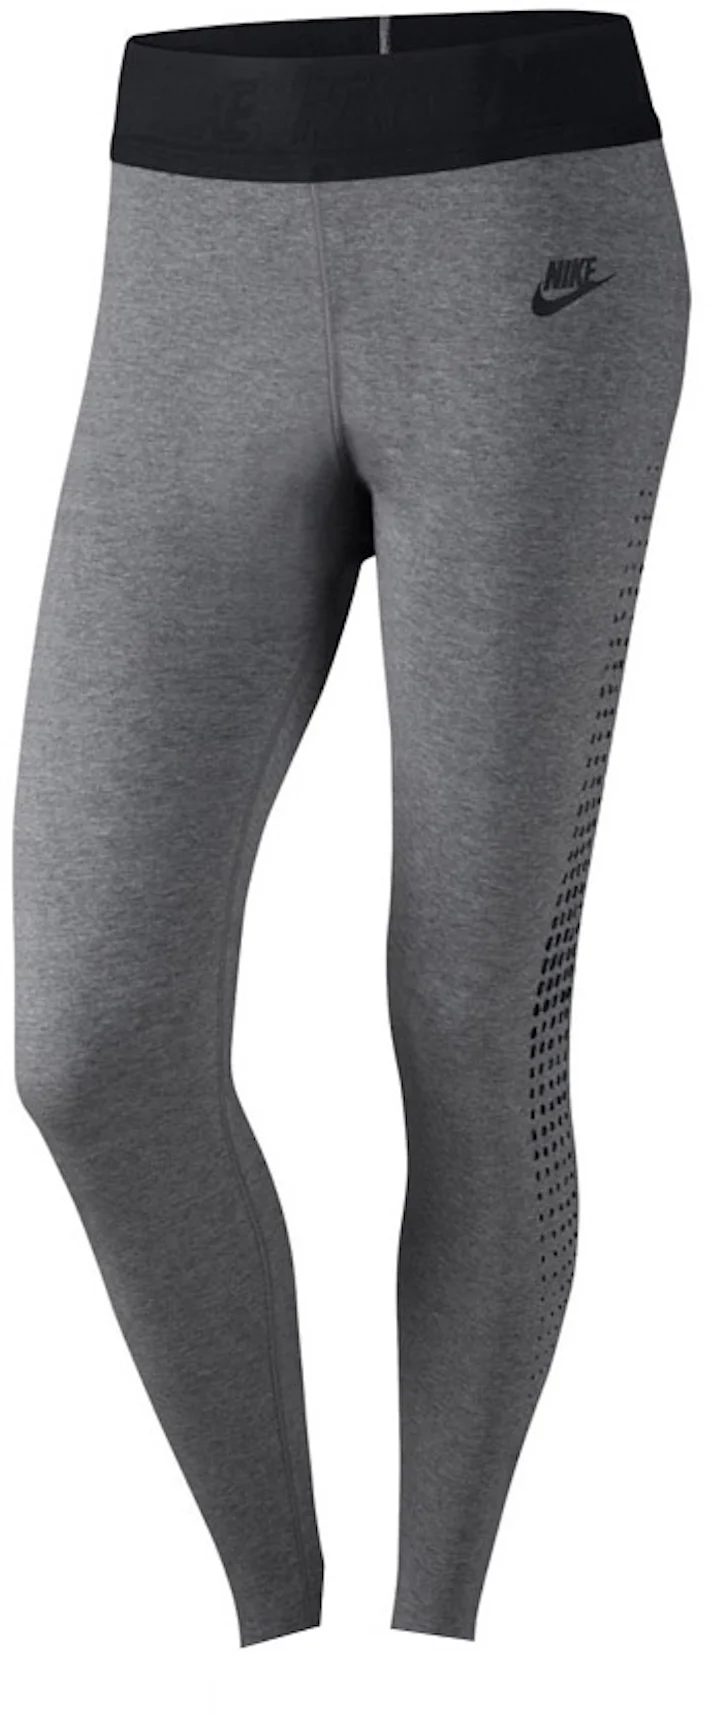 Nike Pro Crossover Leggings Gray - $32 (41% Off Retail) - From Alyssa